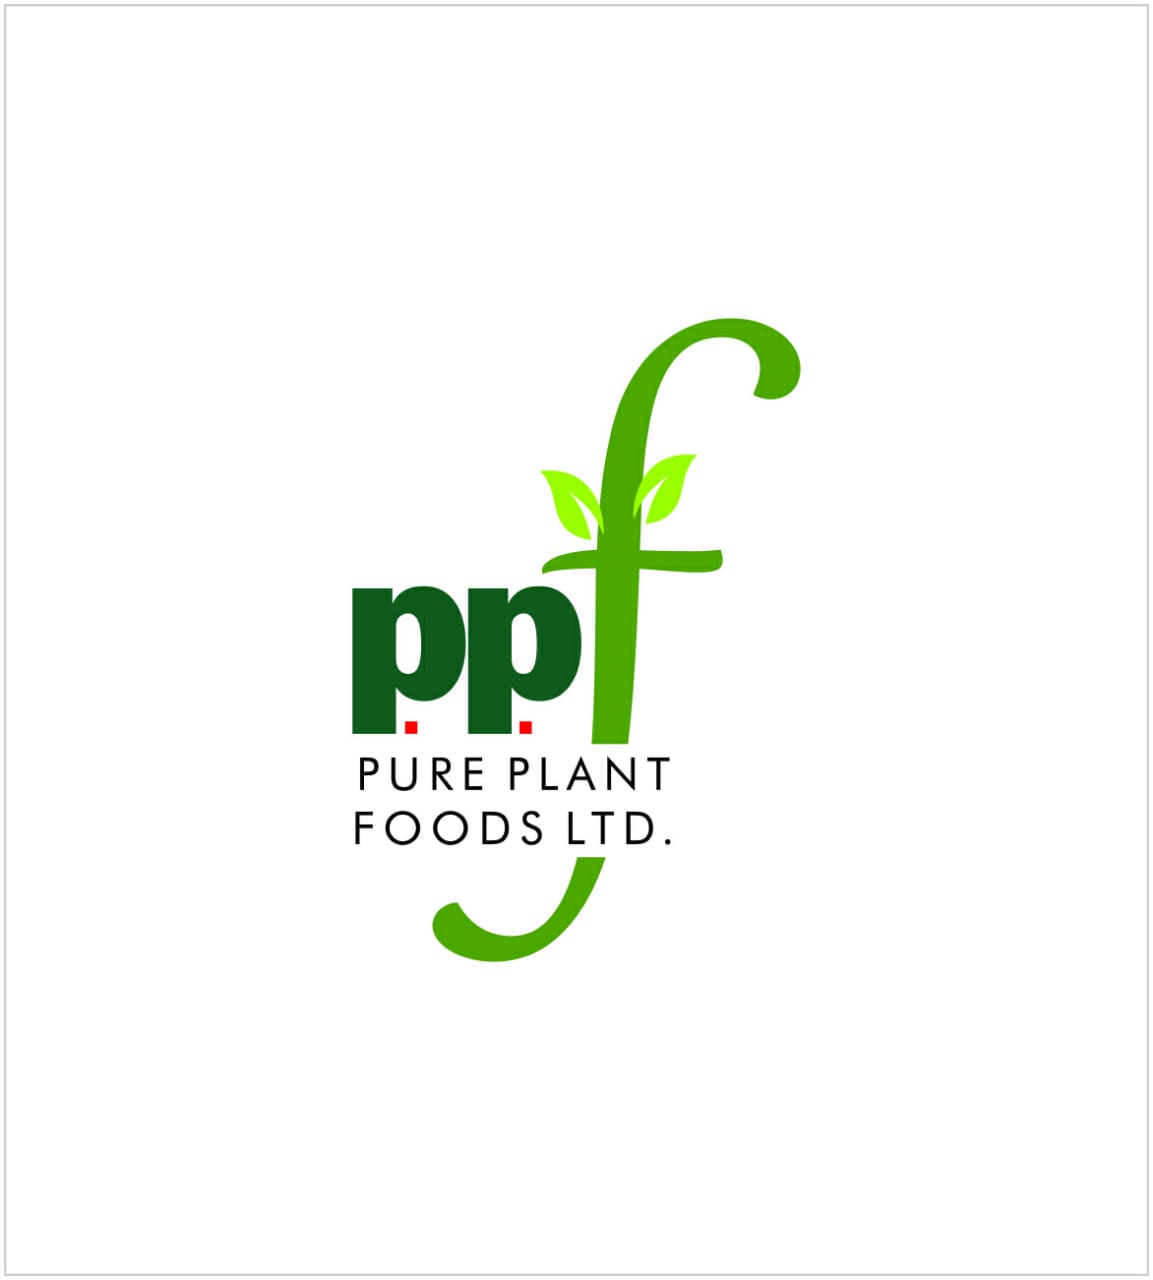 Pure Plant Foods Ltd